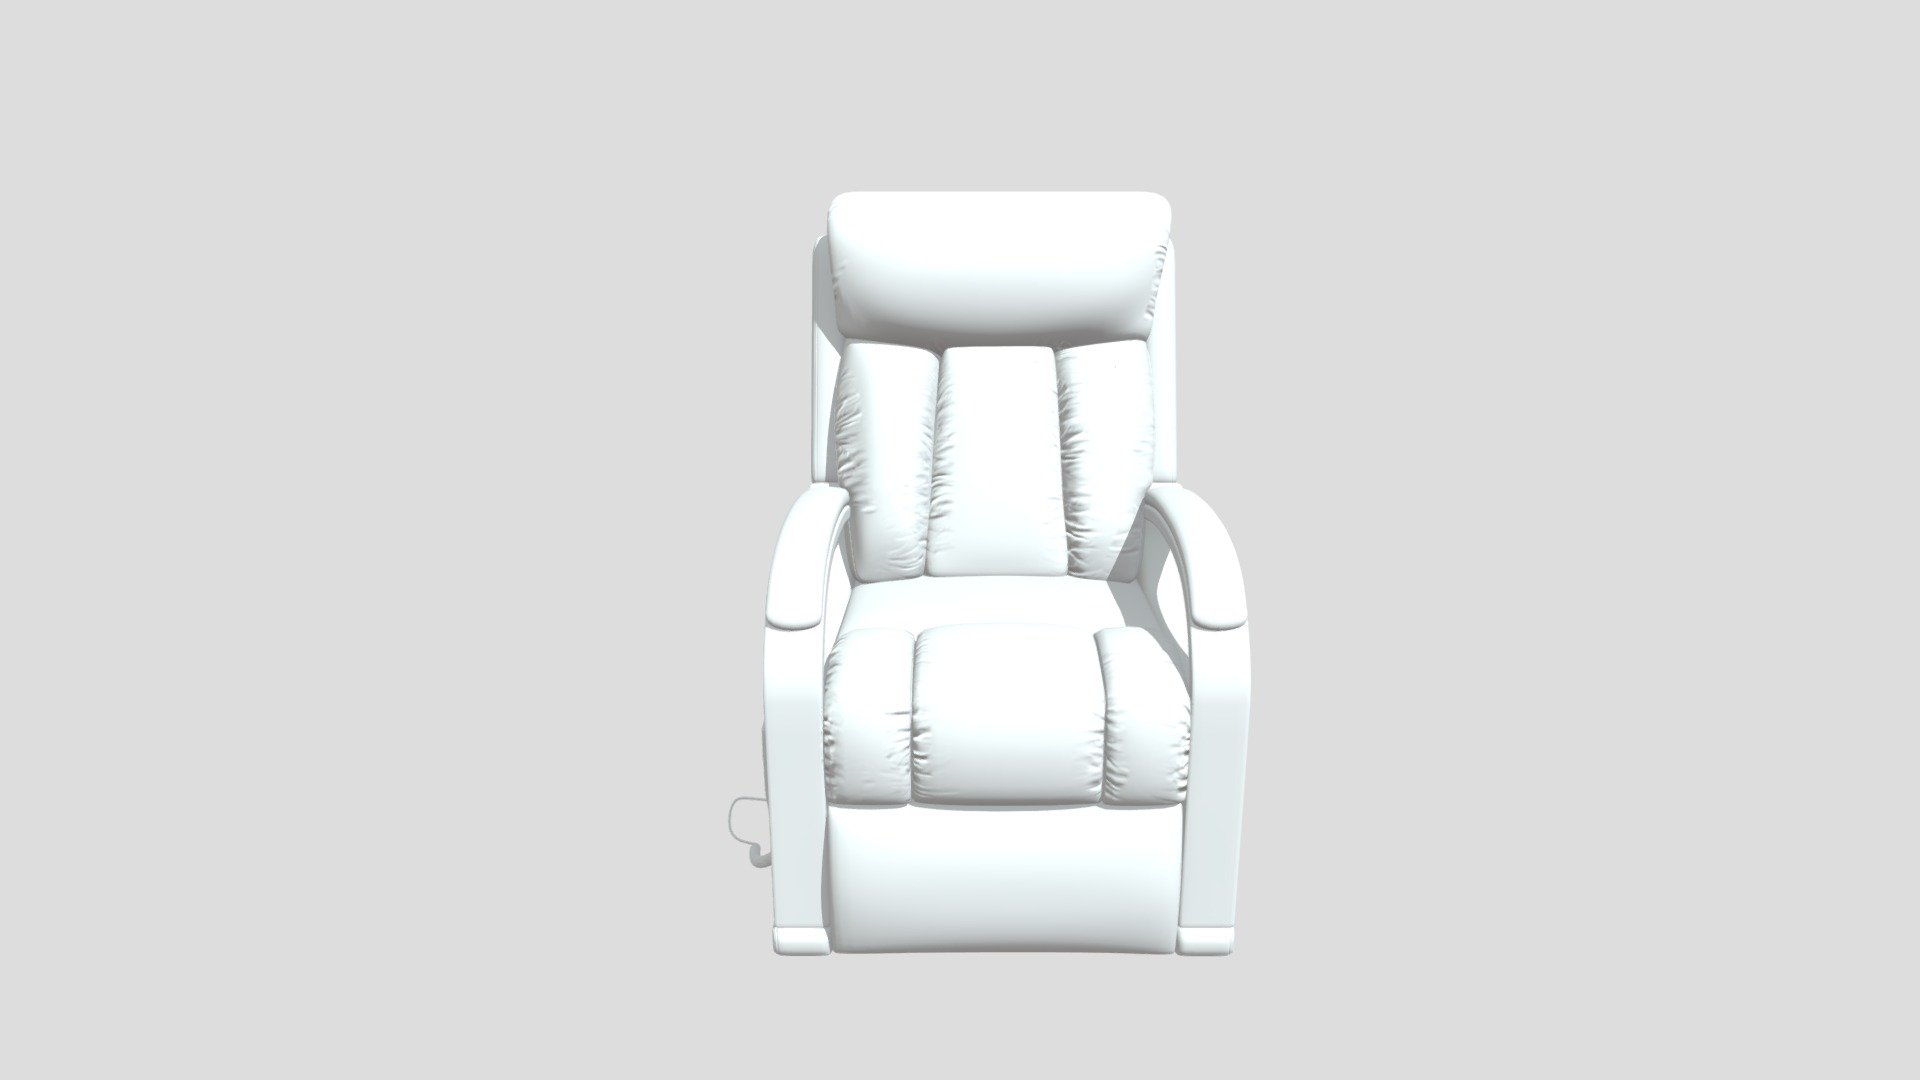 test massage chair project - test massage chair project - 3D model by nhocpixpu 3d model